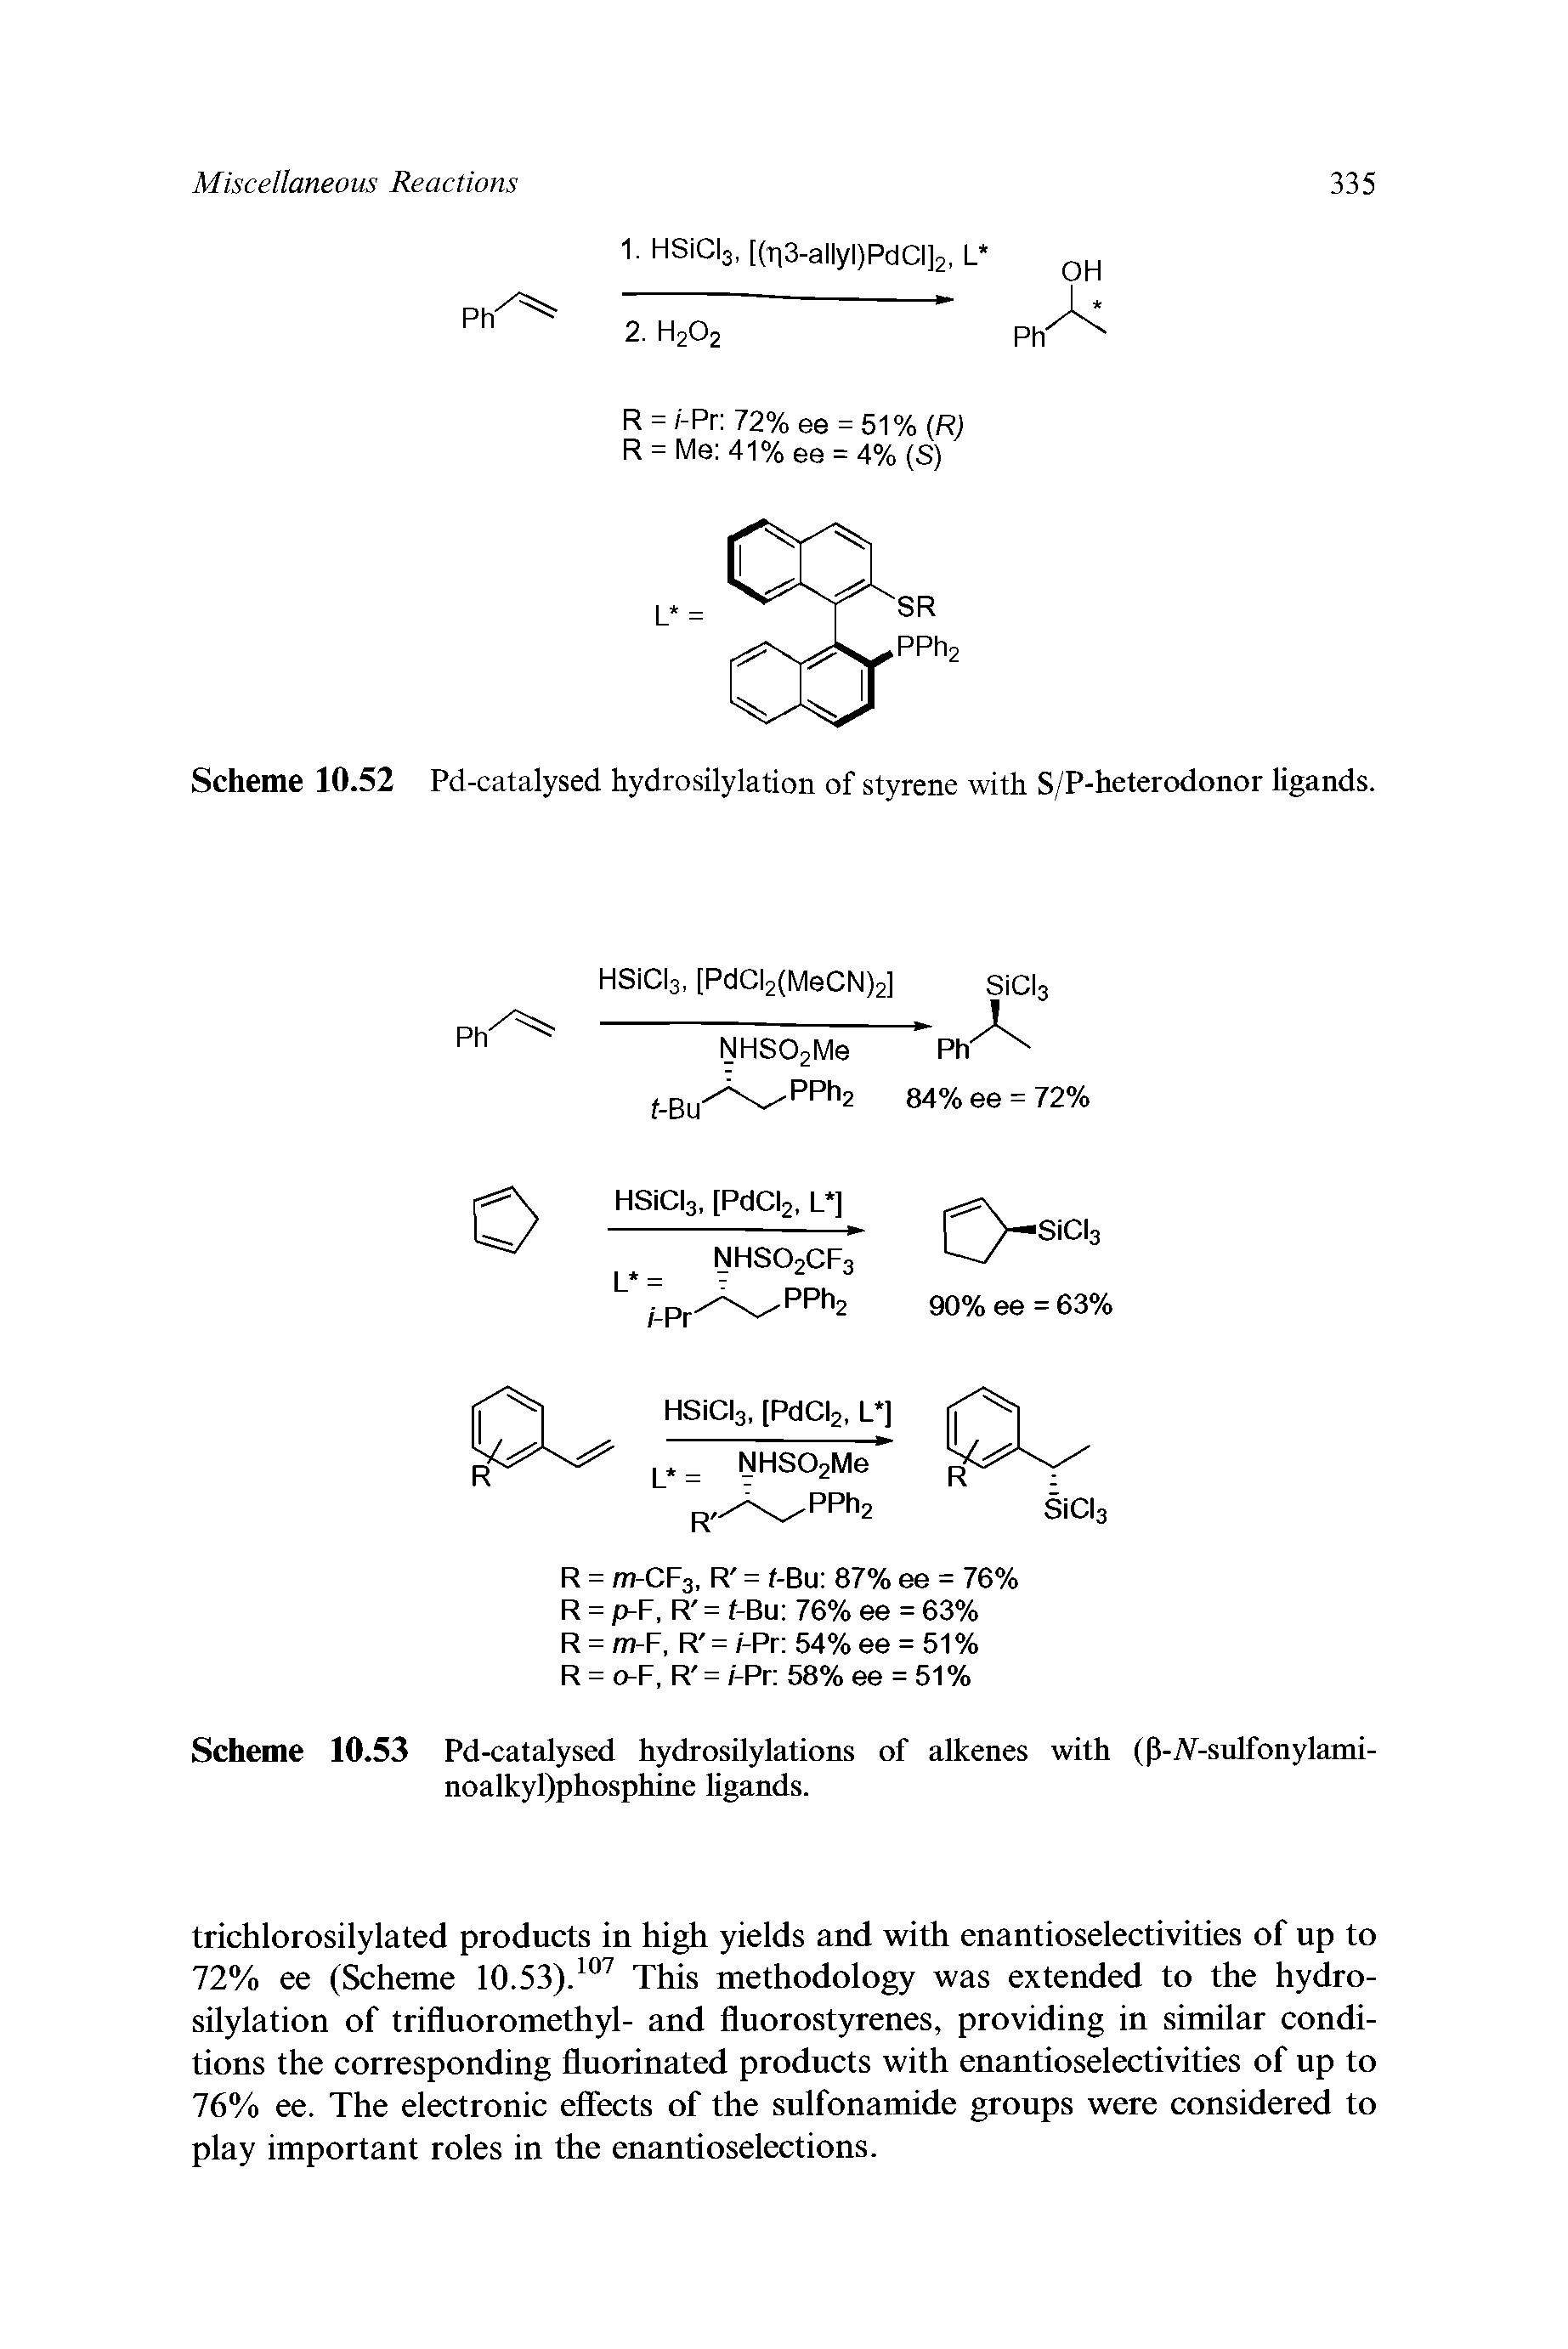 Scheme 10.53 Pd-catalysed hydrosilylations of alkenes with (P-Af-sulfonylami-noalkyl)phosphine ligands.